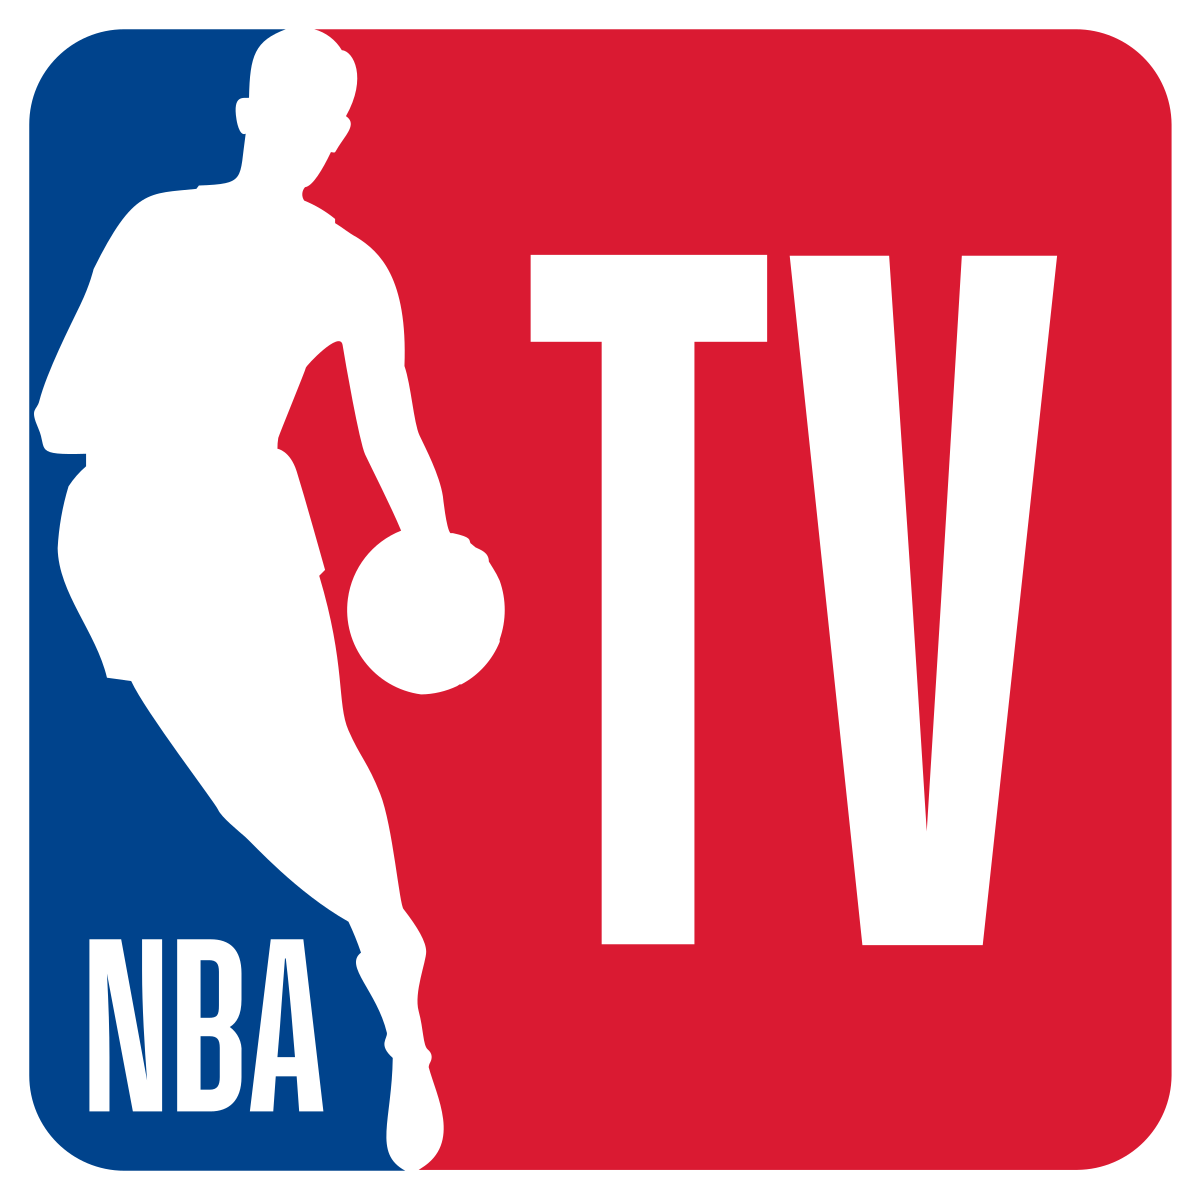 Utah Jazz to host NBA All-Star 2023